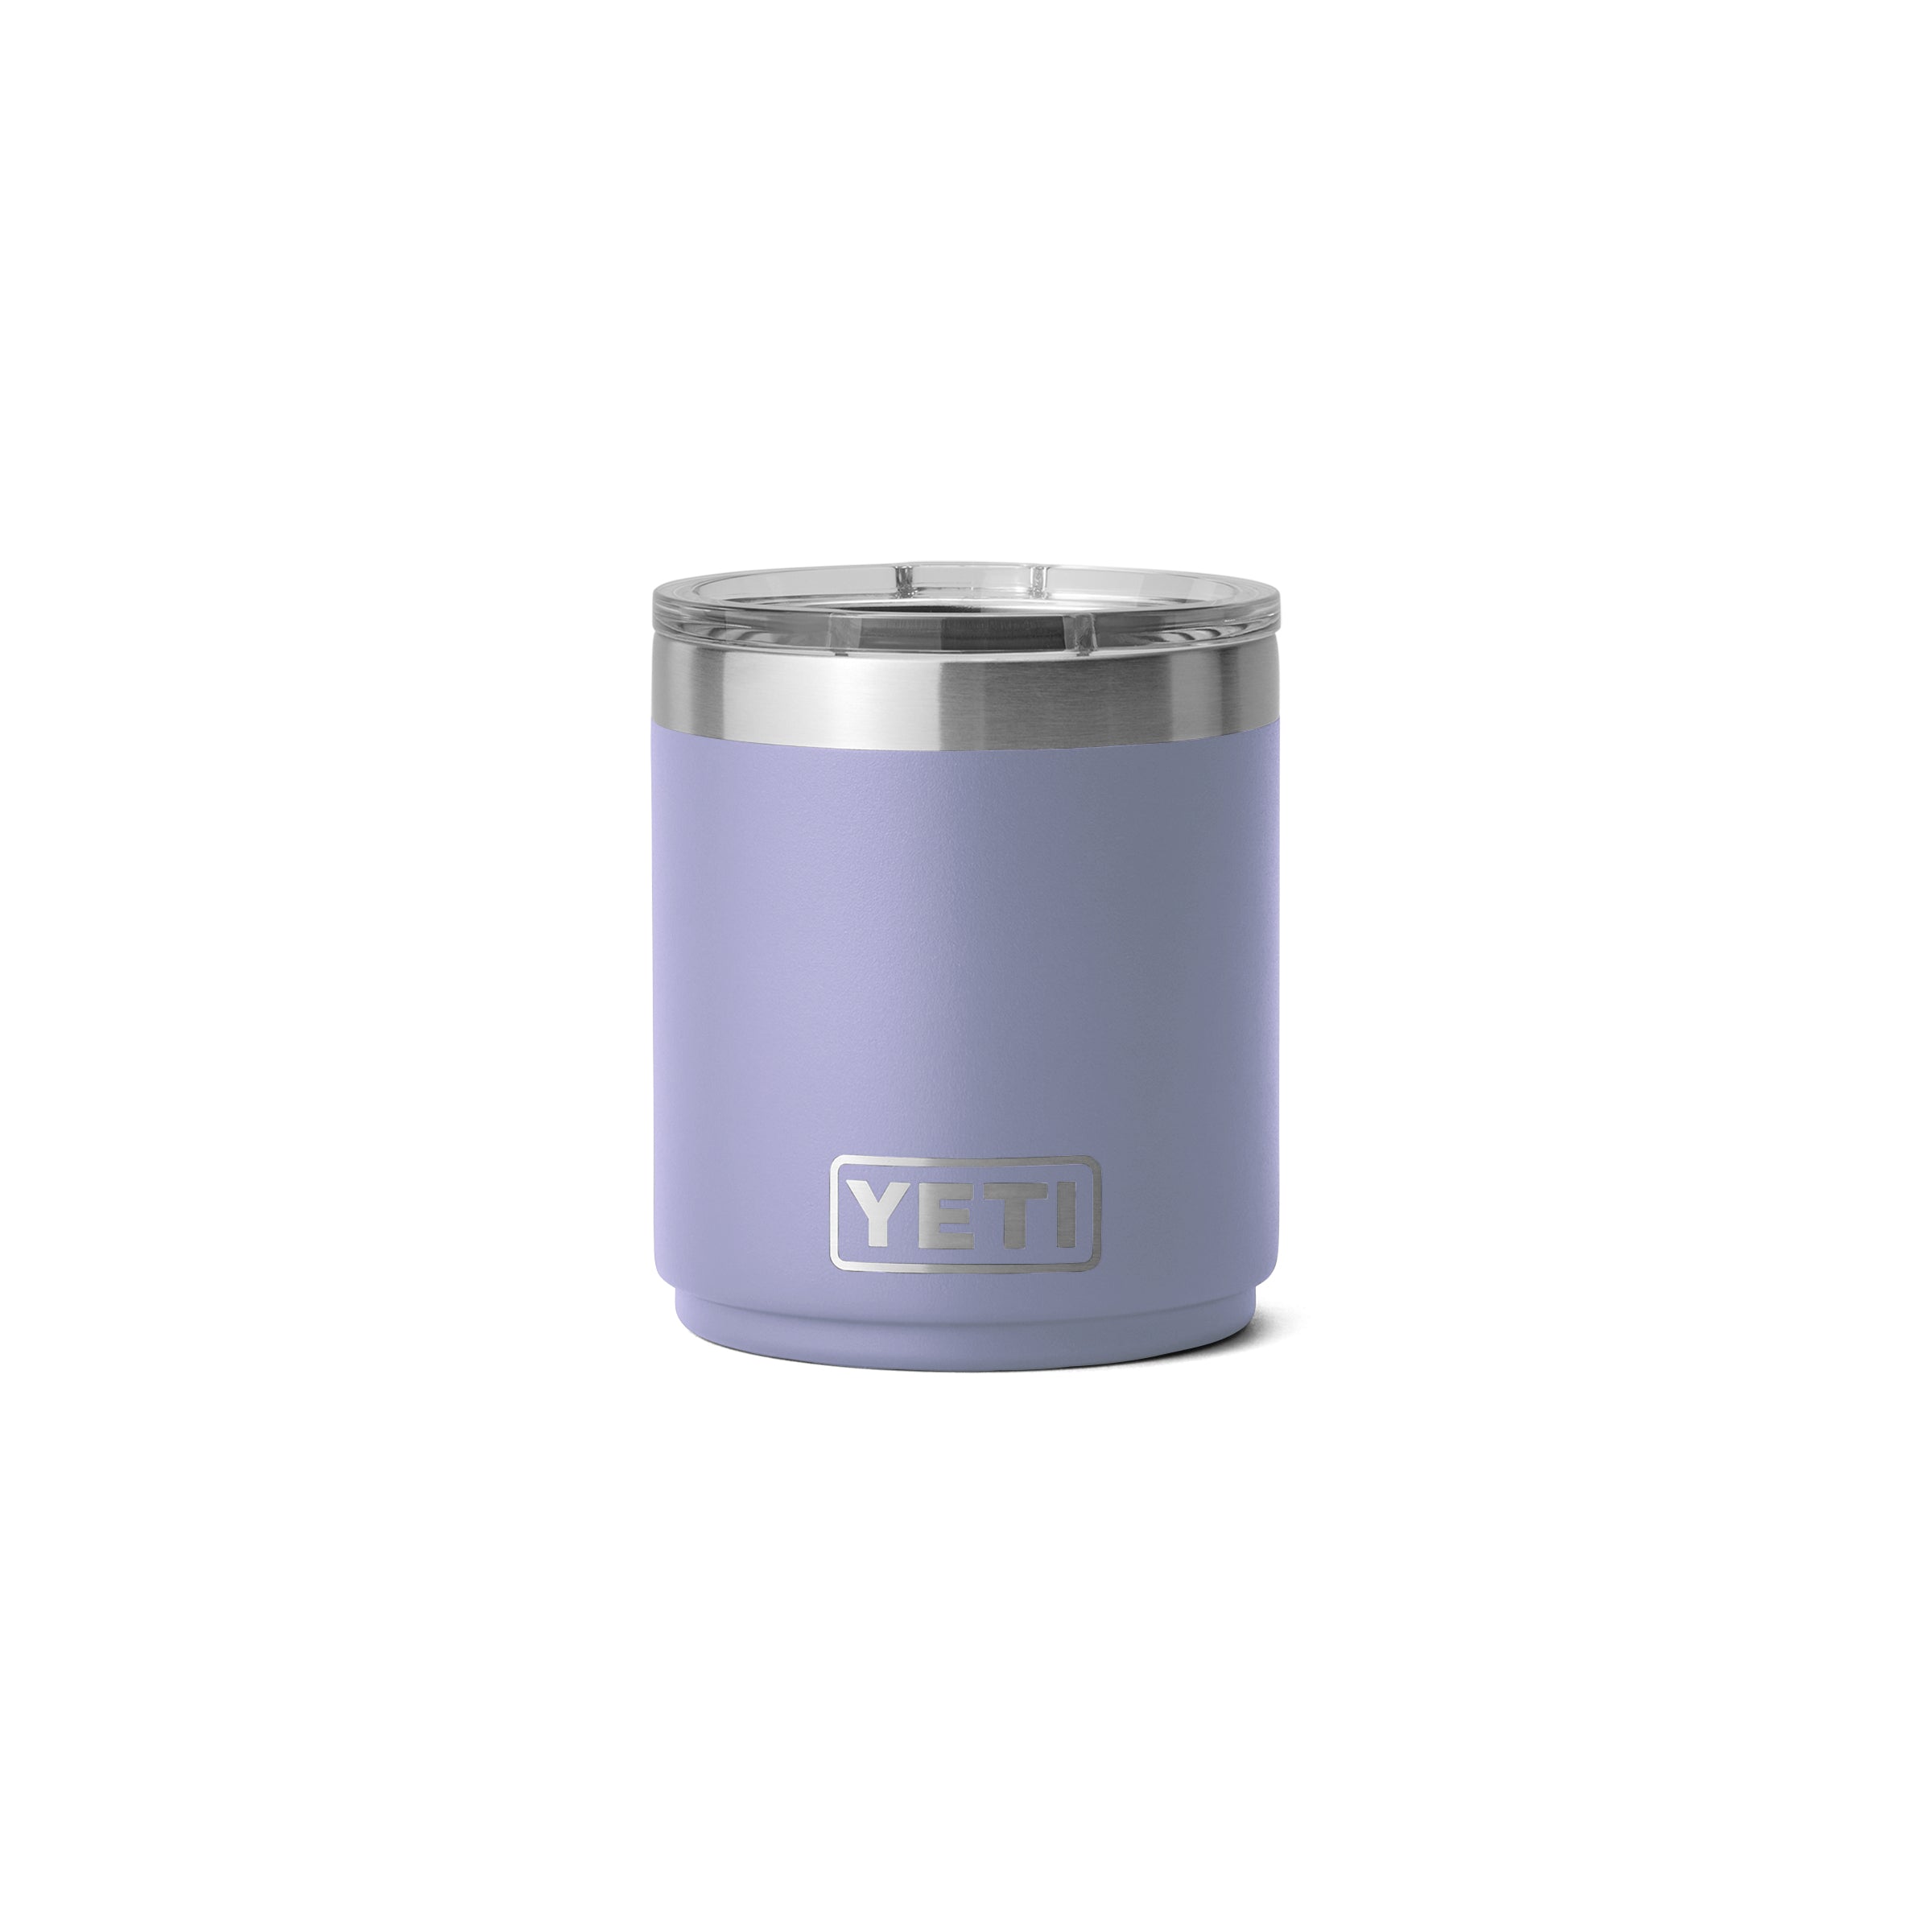 YETI- Roadie 24 Hard Cooler Cosmic Lilac